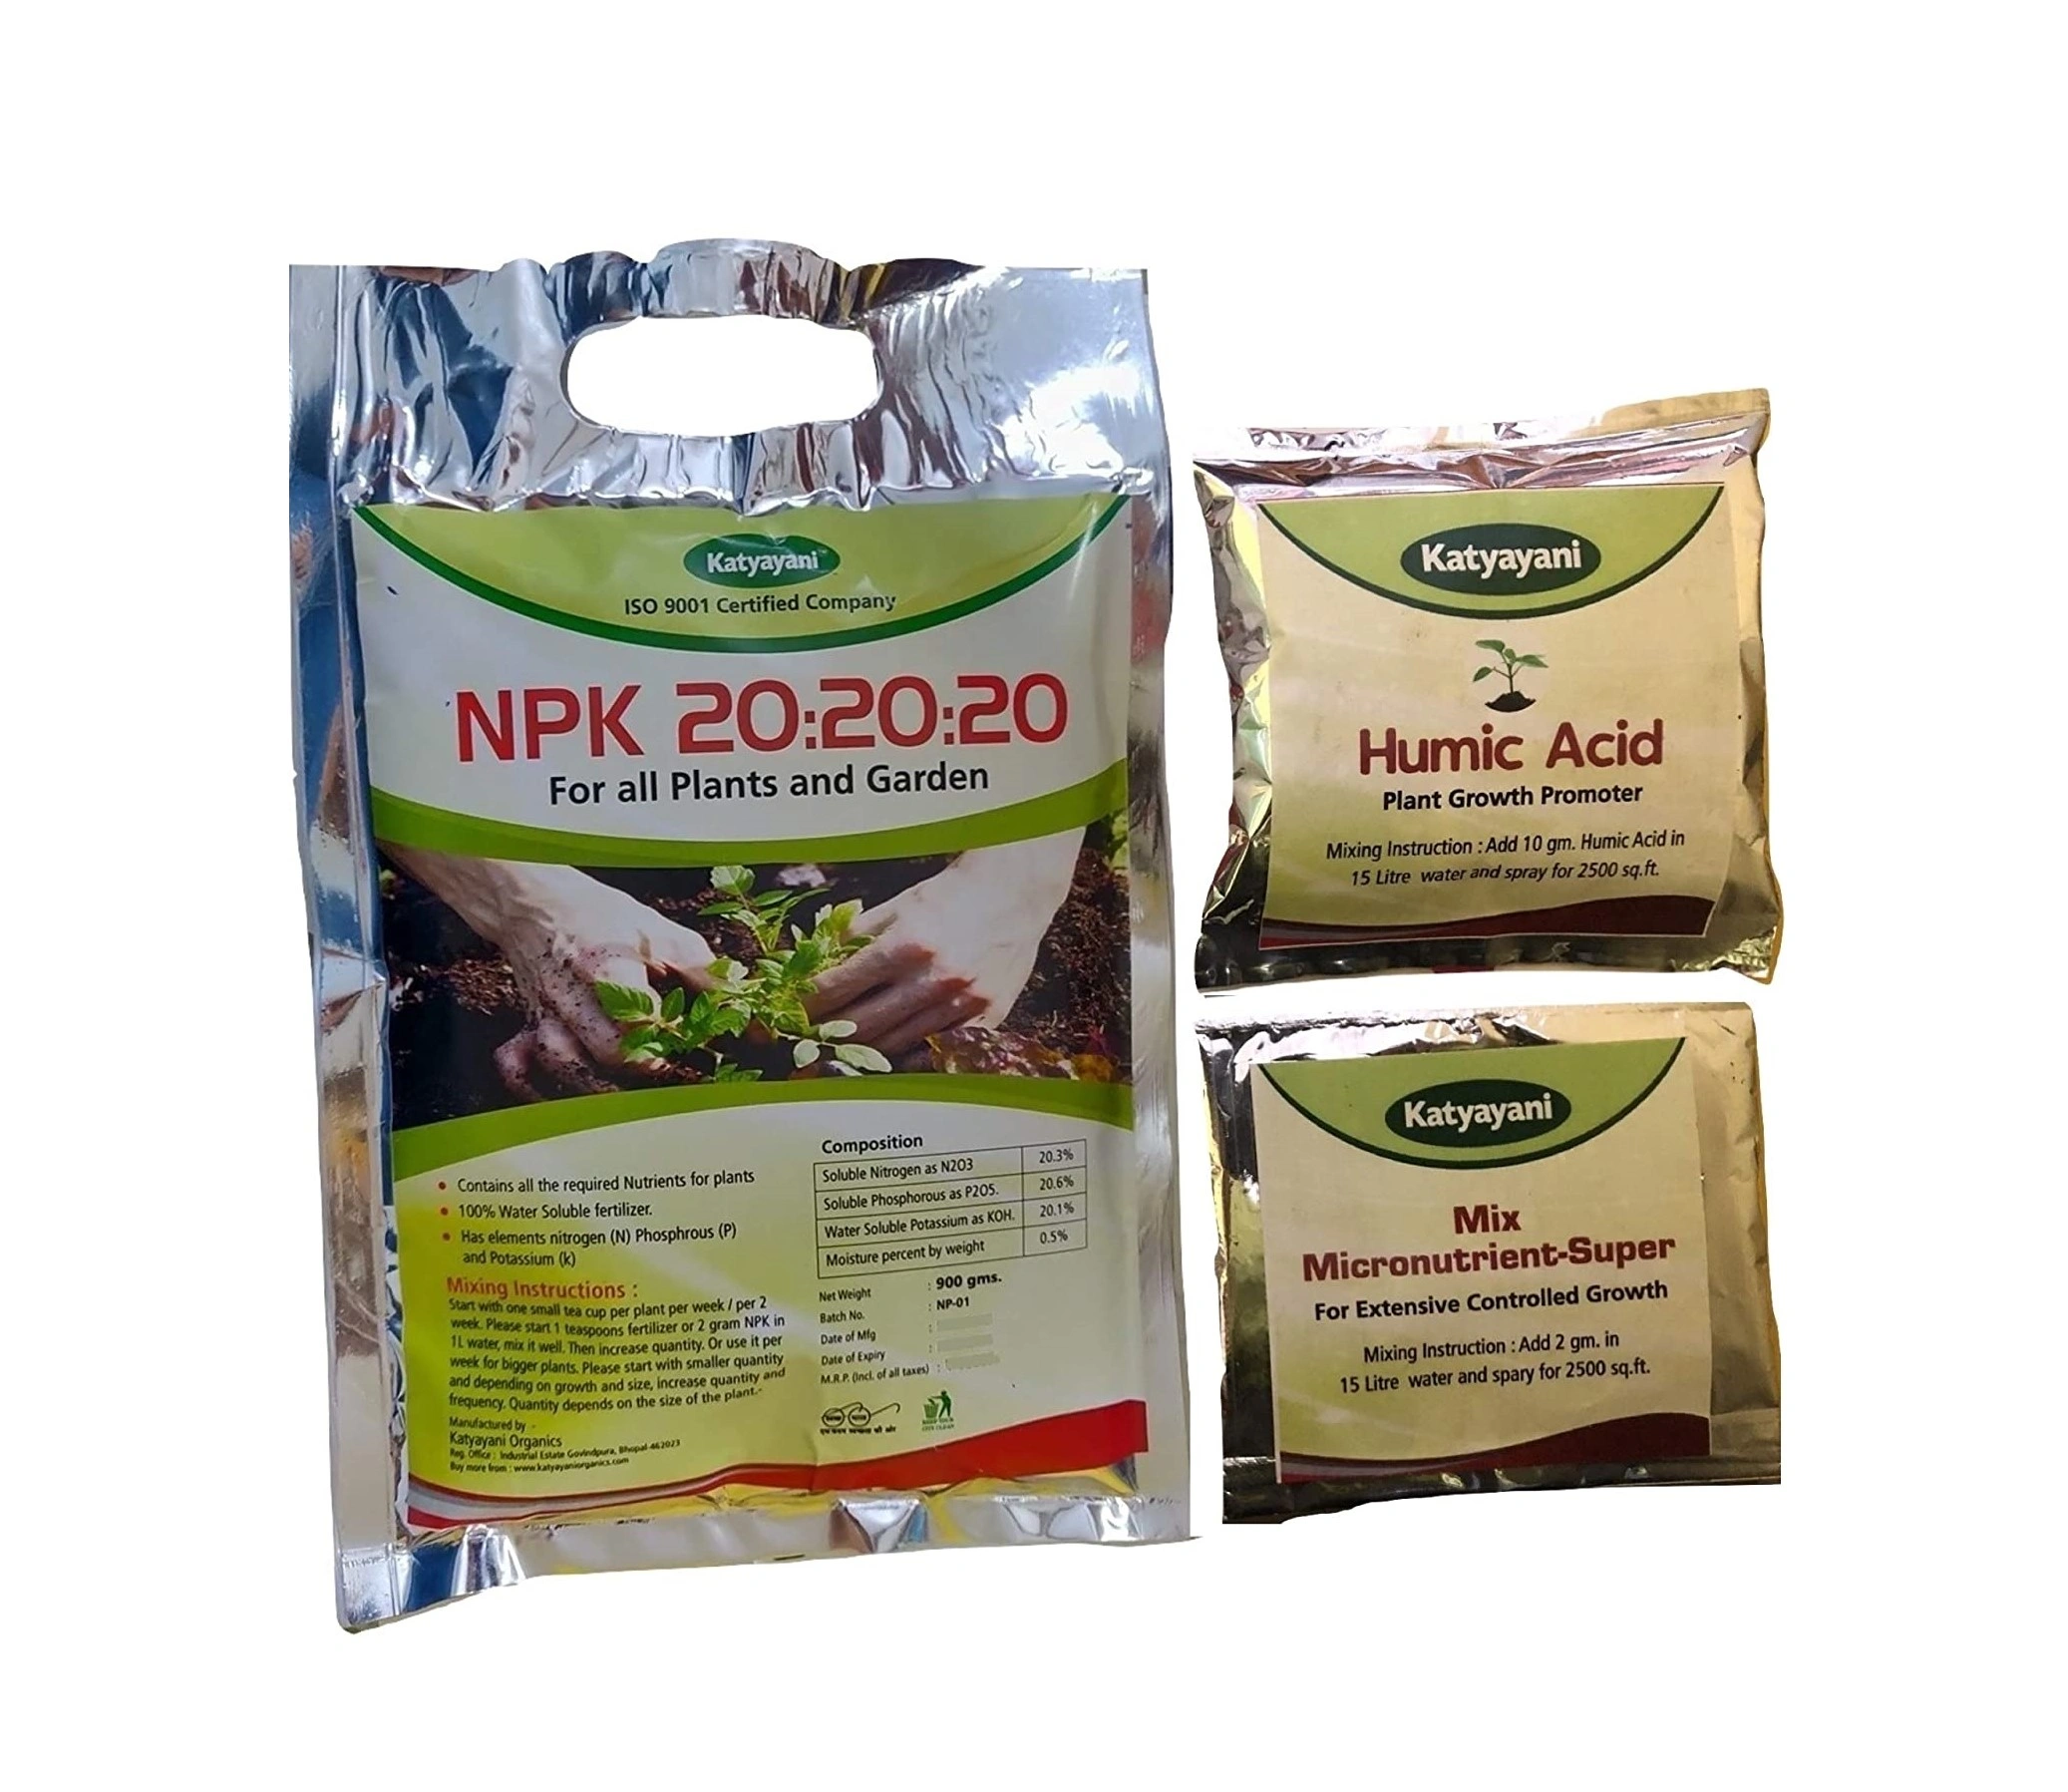 NPK 20 20 20 Fertilizer With 2 Sample -Mix Micronutrients And Organic Humic Acid-11376218